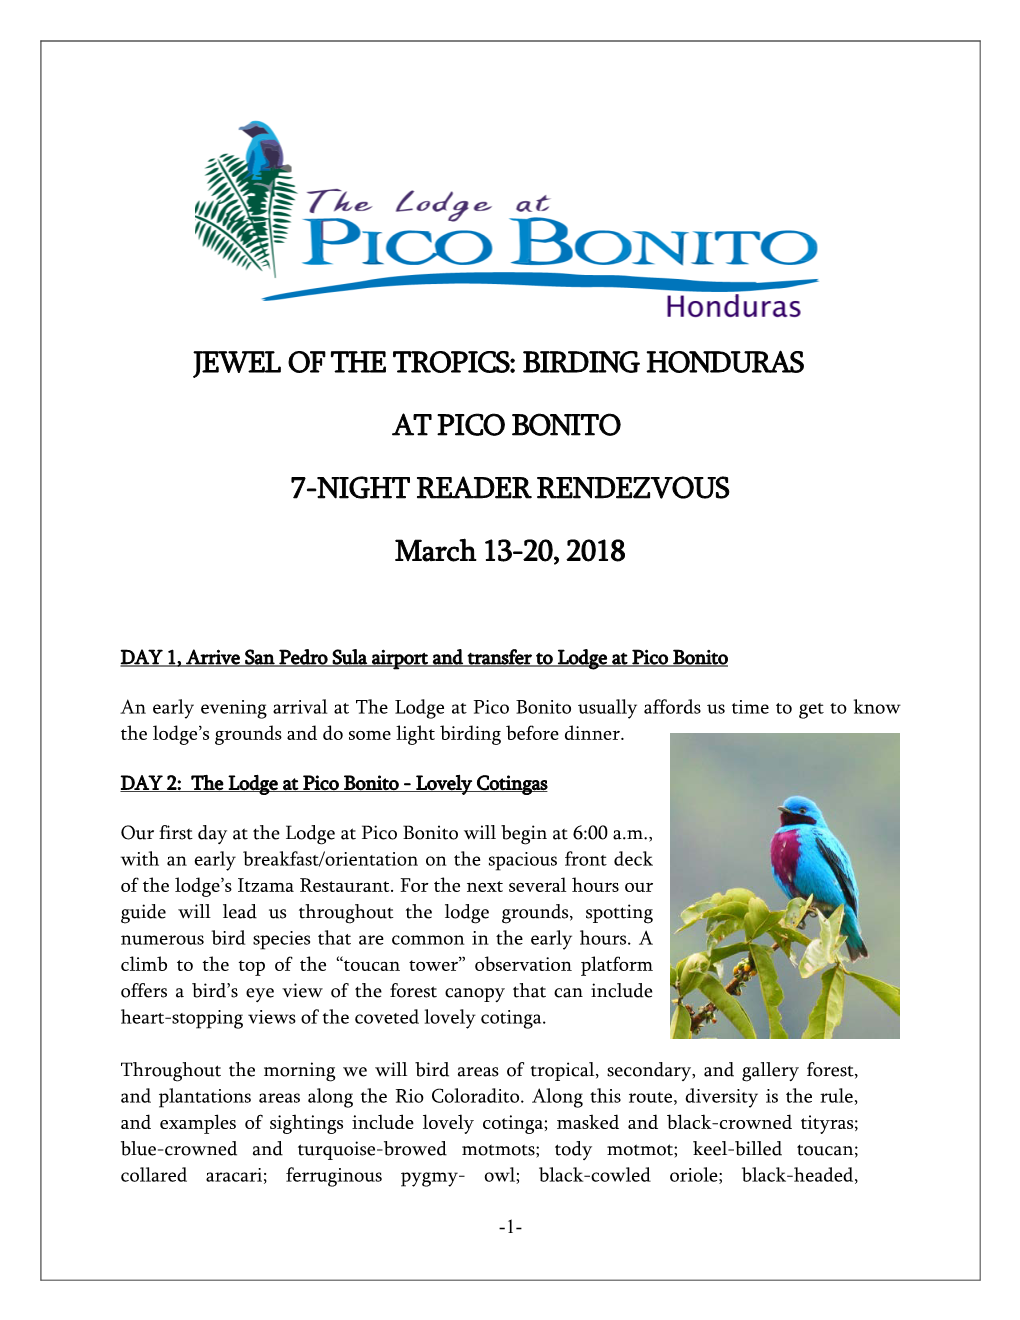 Jewel of the Tropics: Birding Honduras at Pico Bonito 7